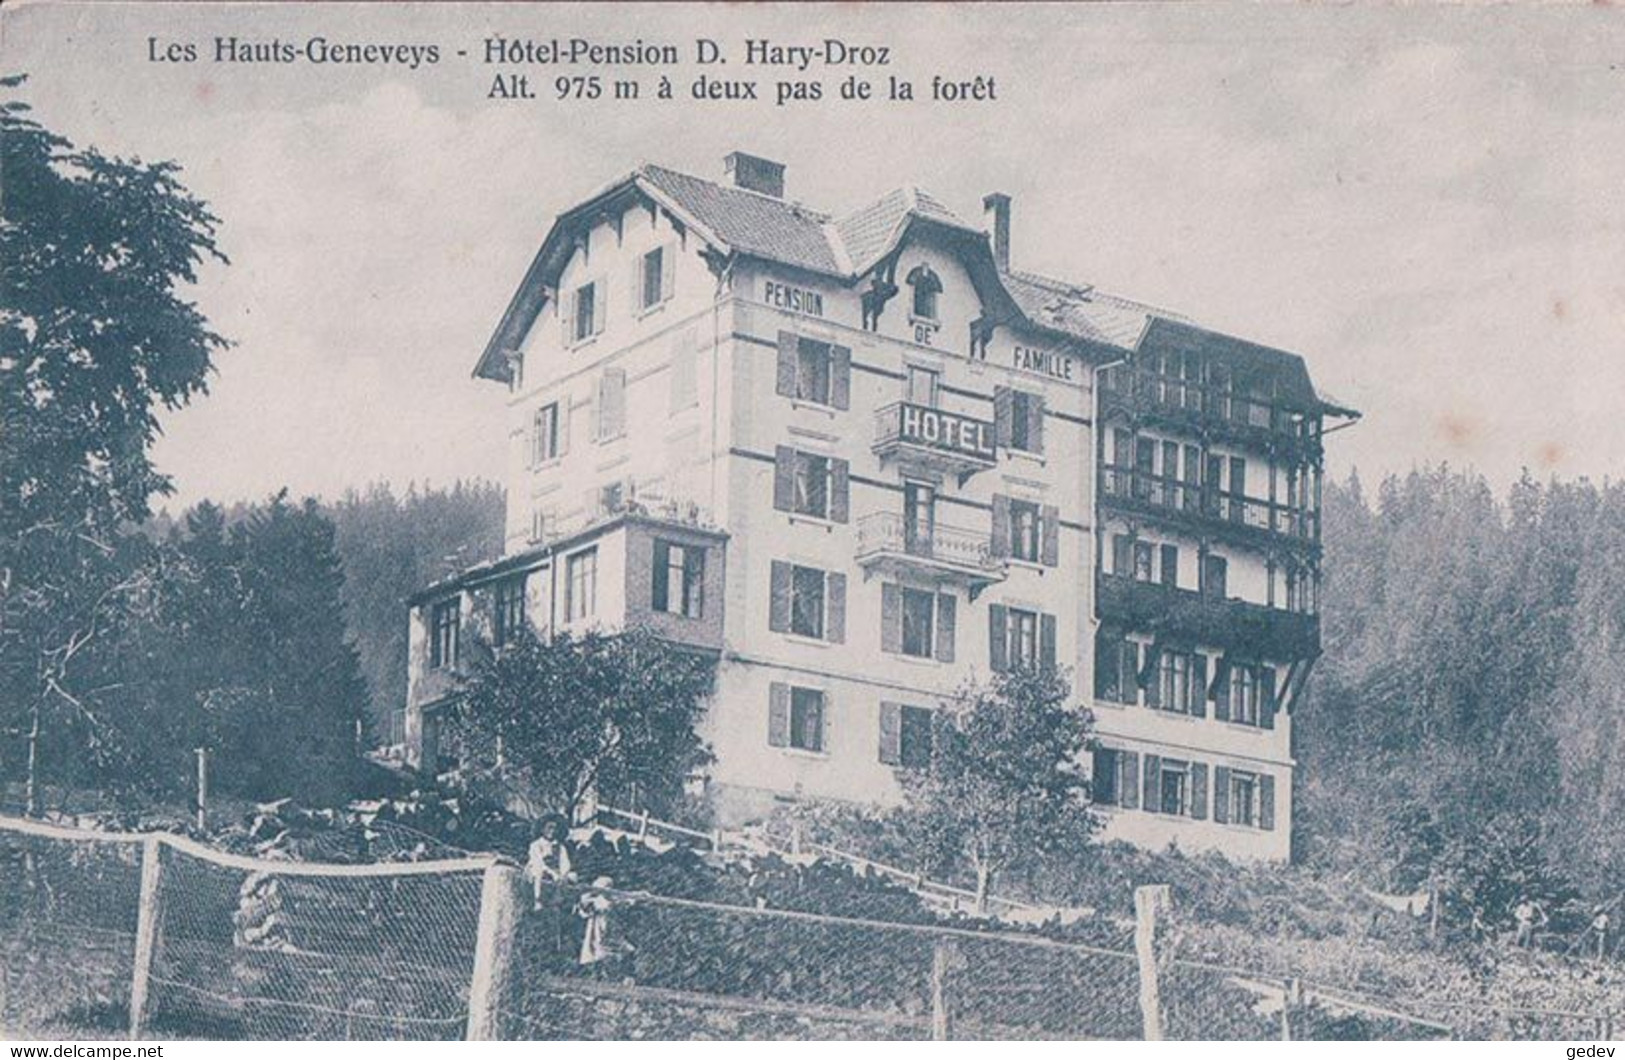 Les Hauts-Geneveys NE, Hôtel Pension D. Hary-Droz (975) - Les Hauts-Geneveys